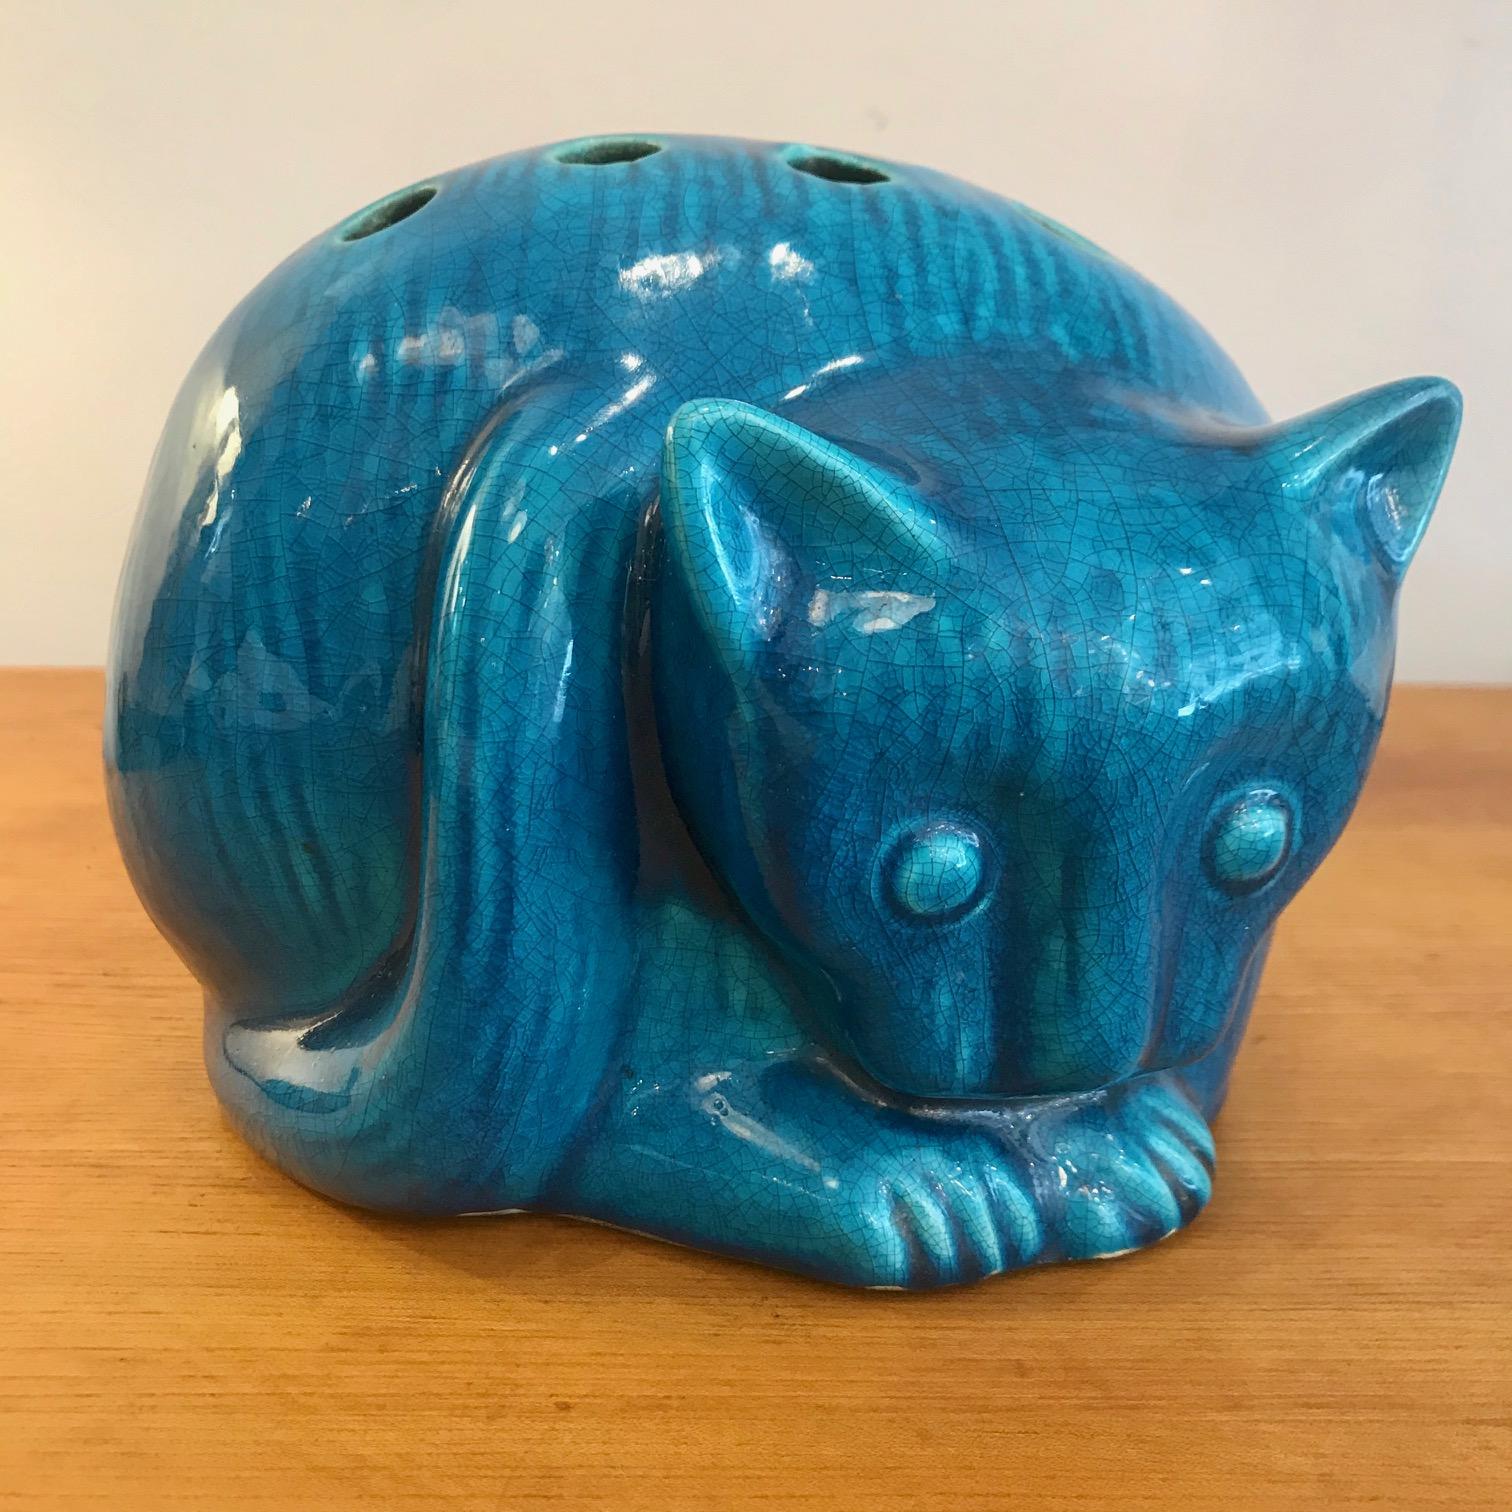 A blue glazed ceramic vase or 